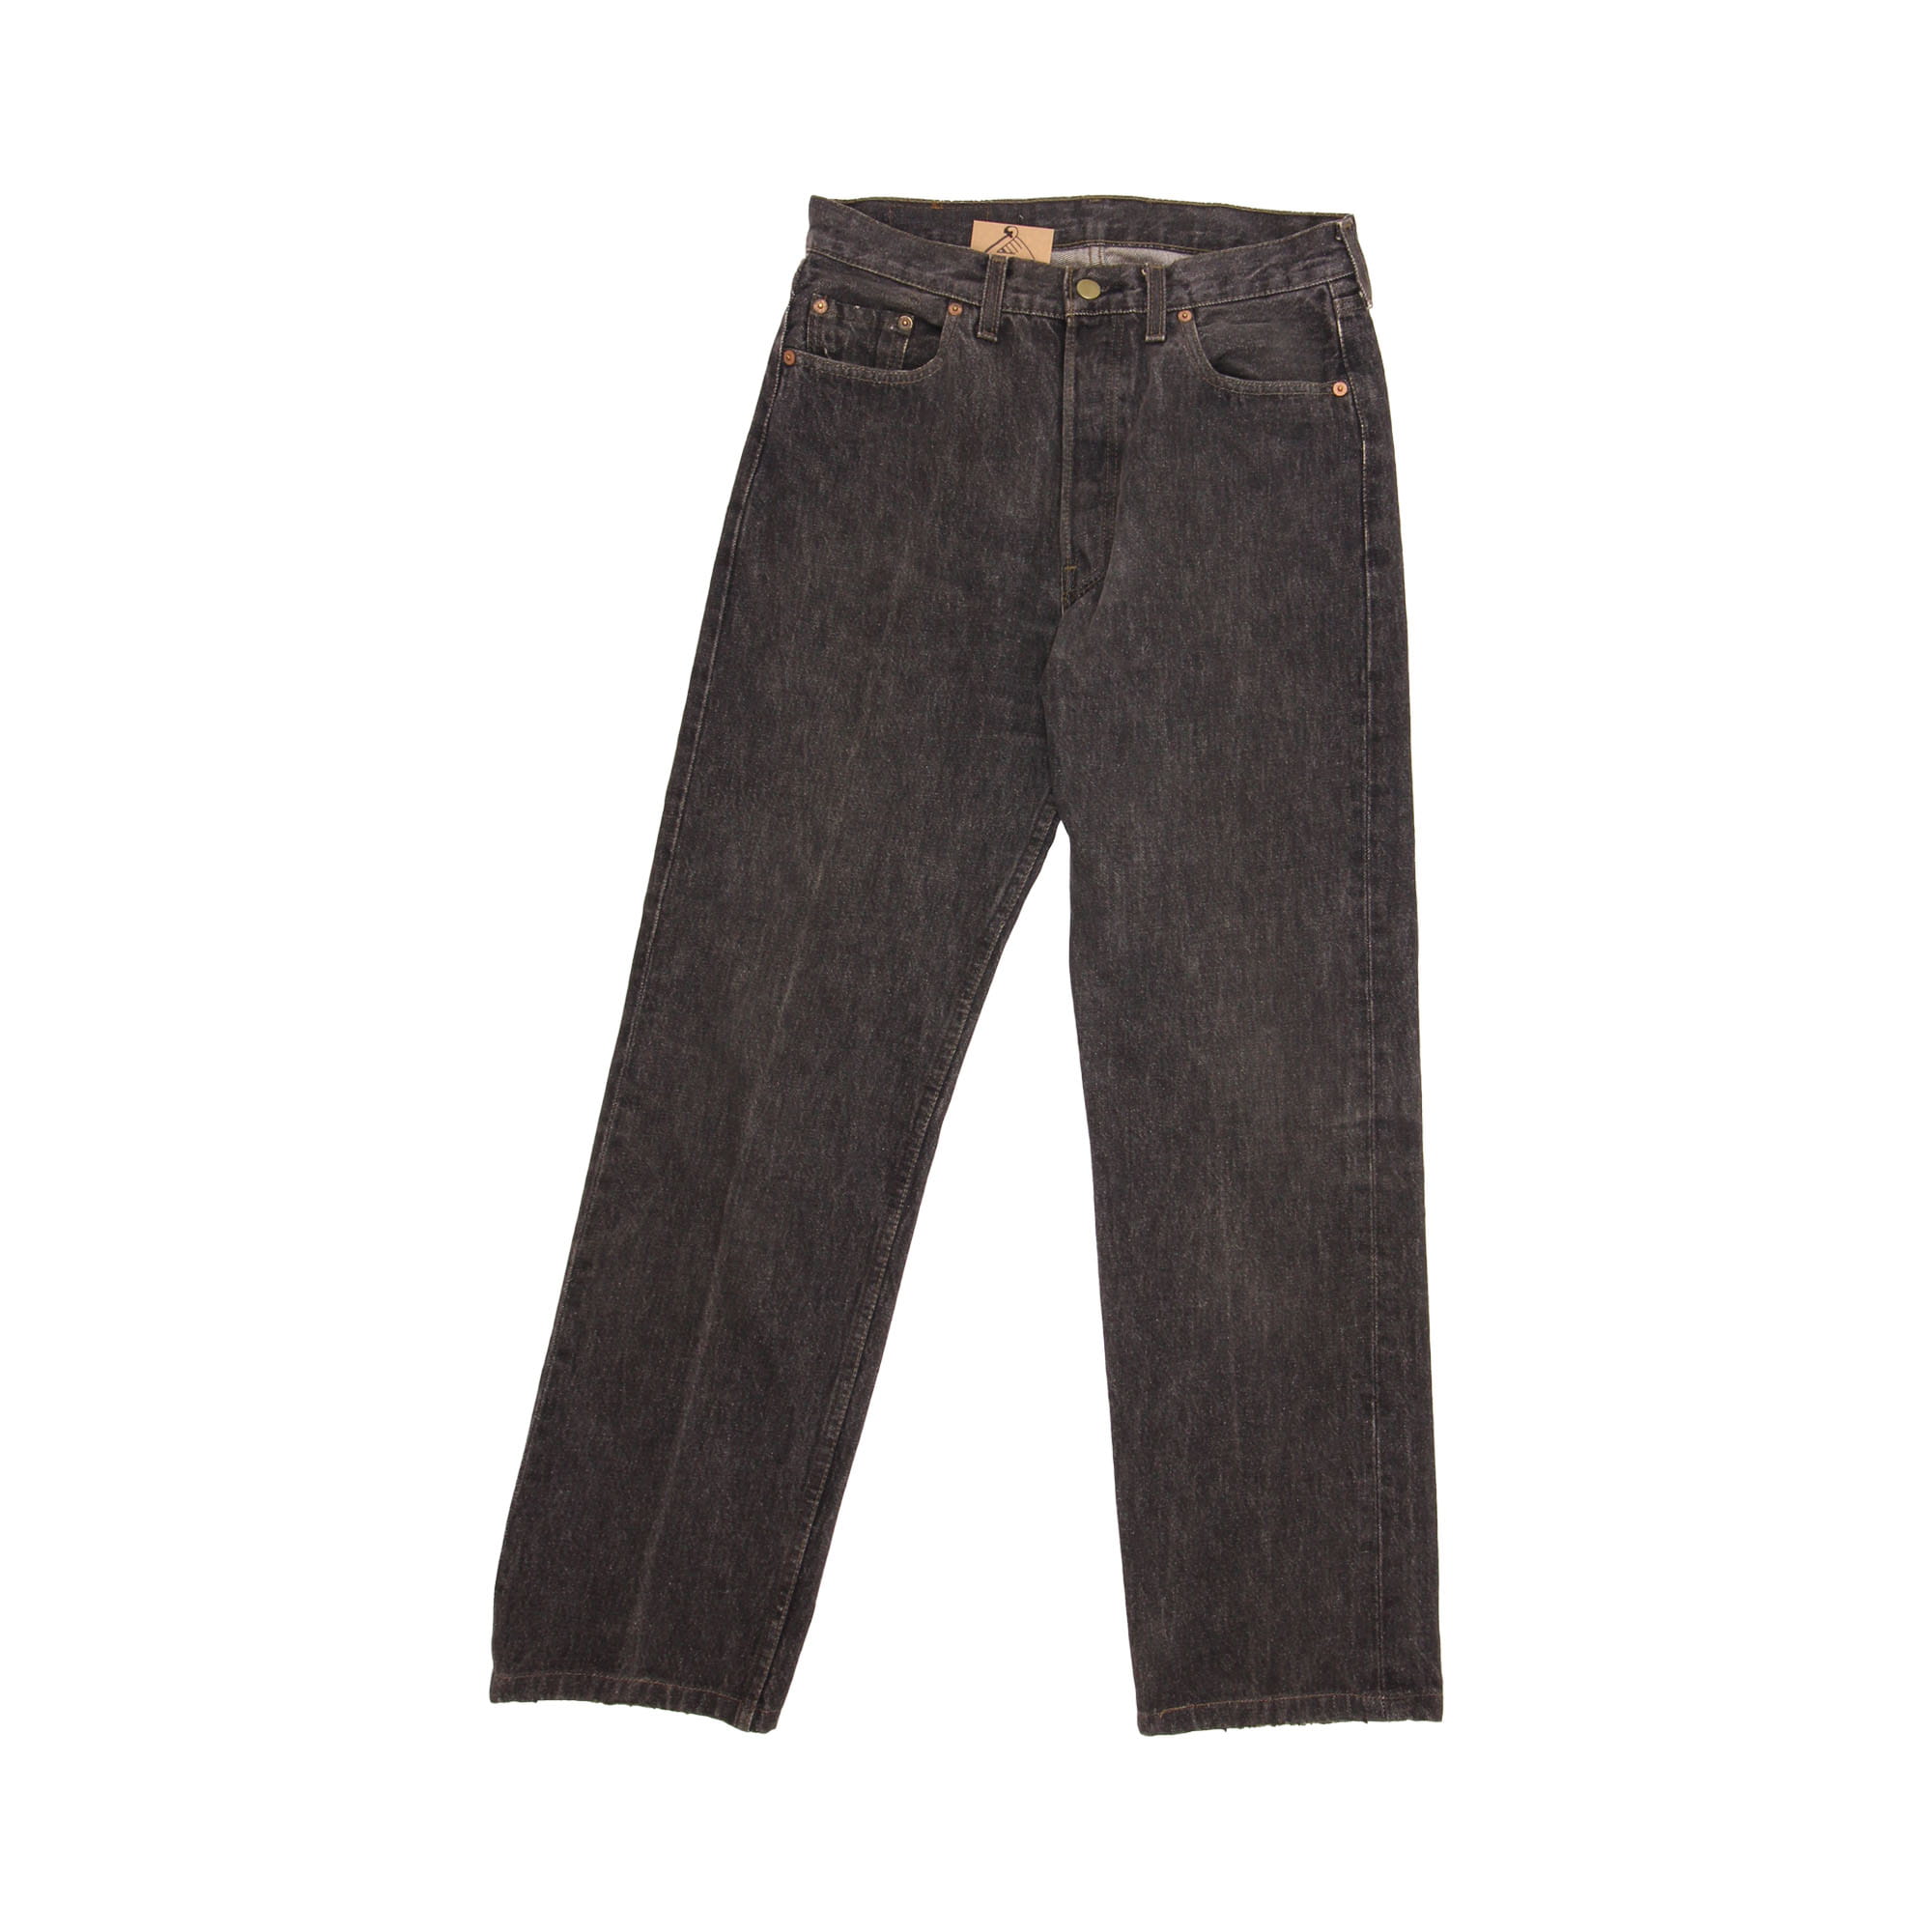 Levi's 501 Jeans -  W31 L34